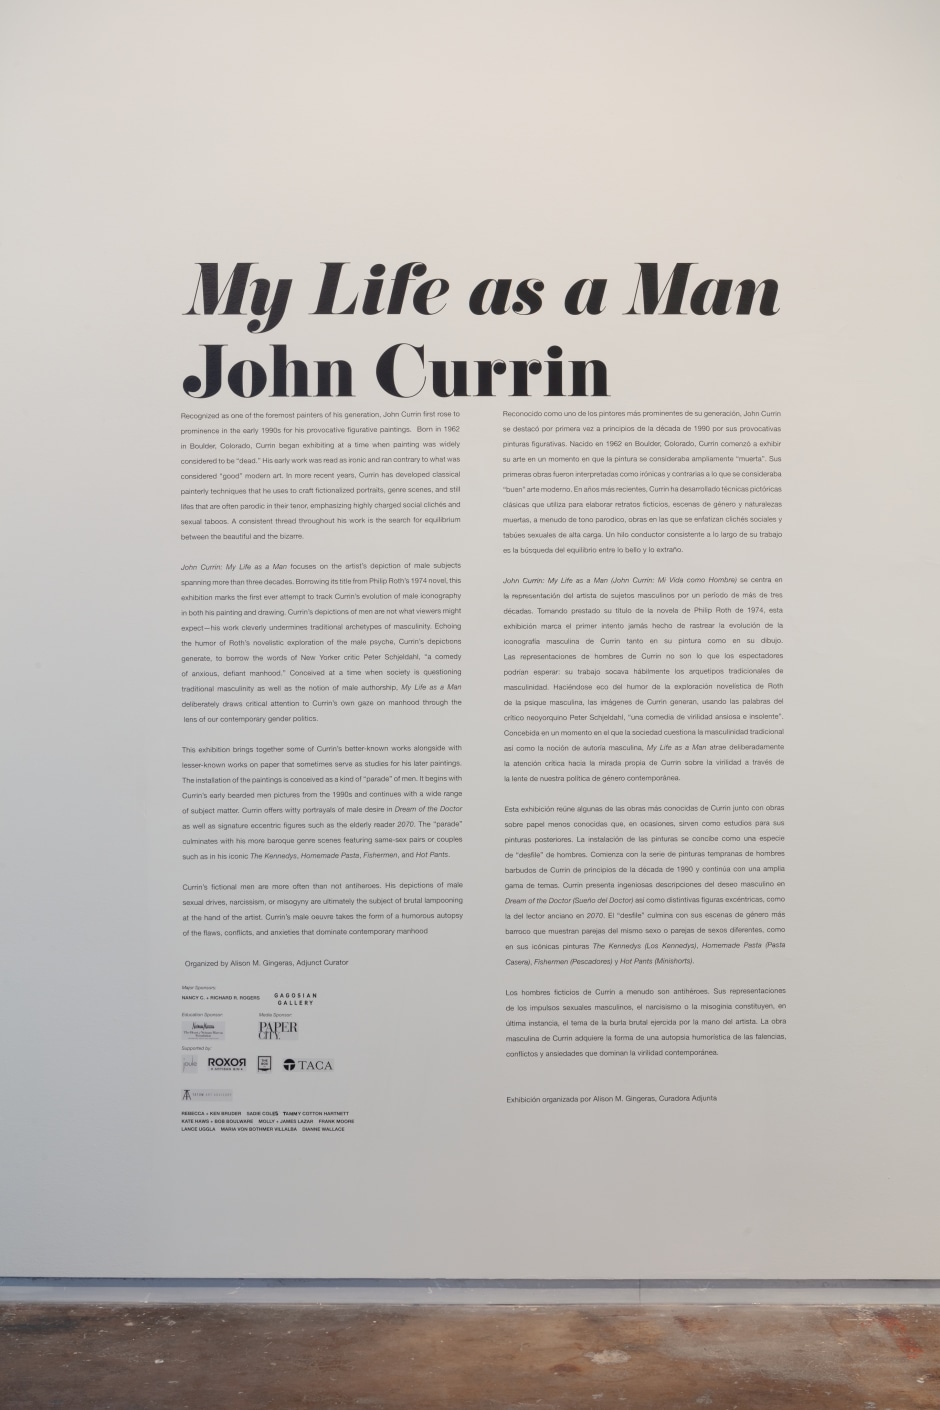 Installation view, John Currin, My Life as a Man, Dallas Contemporary, Dallas TX, 15 September - 22 December 2019  © John Currin. Courtesy the Artist and Sadie Coles HQ, London.  Photo: Kevin Todora